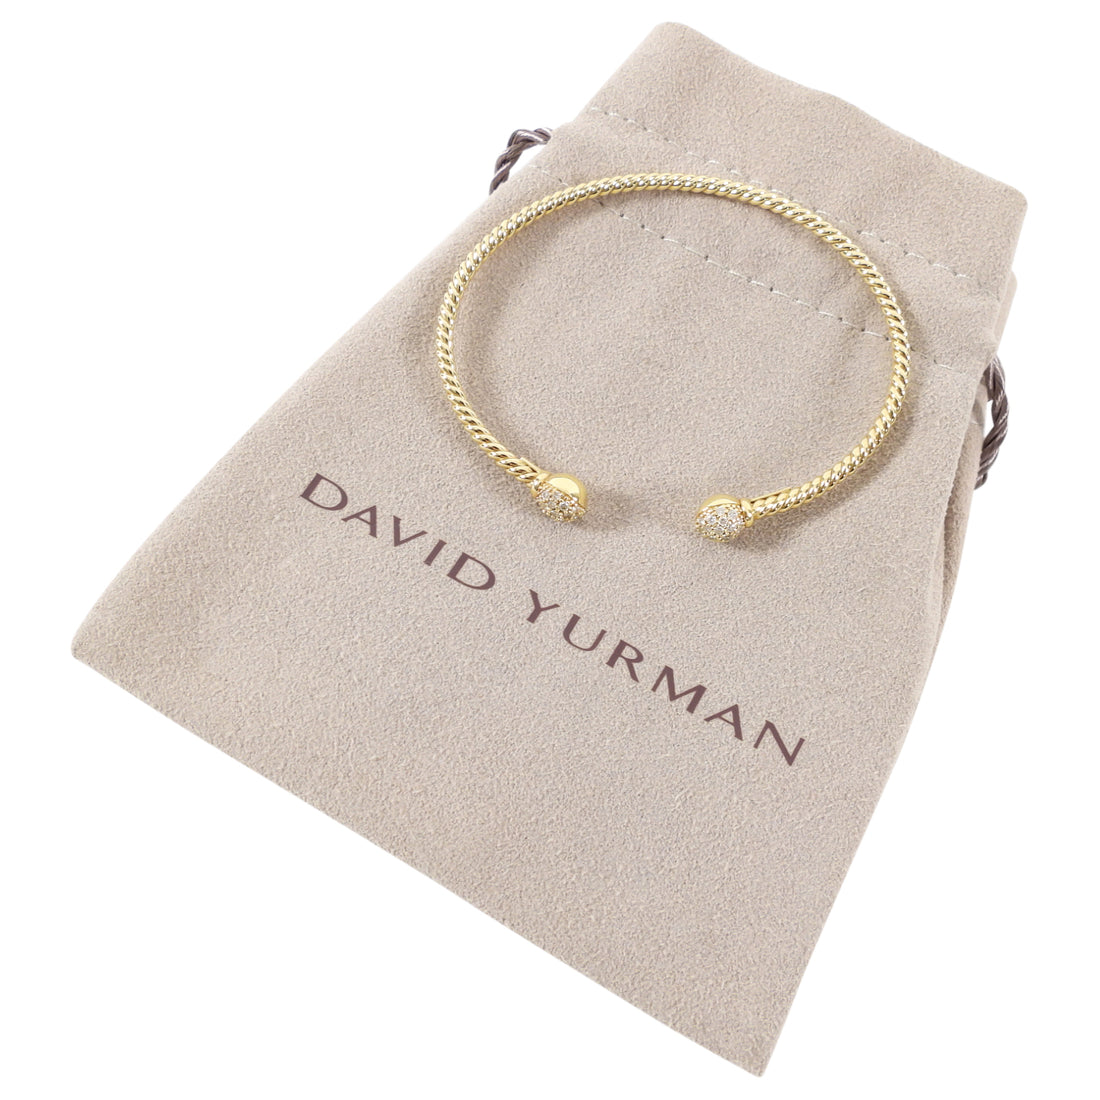 David Yurman 18k Gold Diamond Petite Solari Bead Bracelet